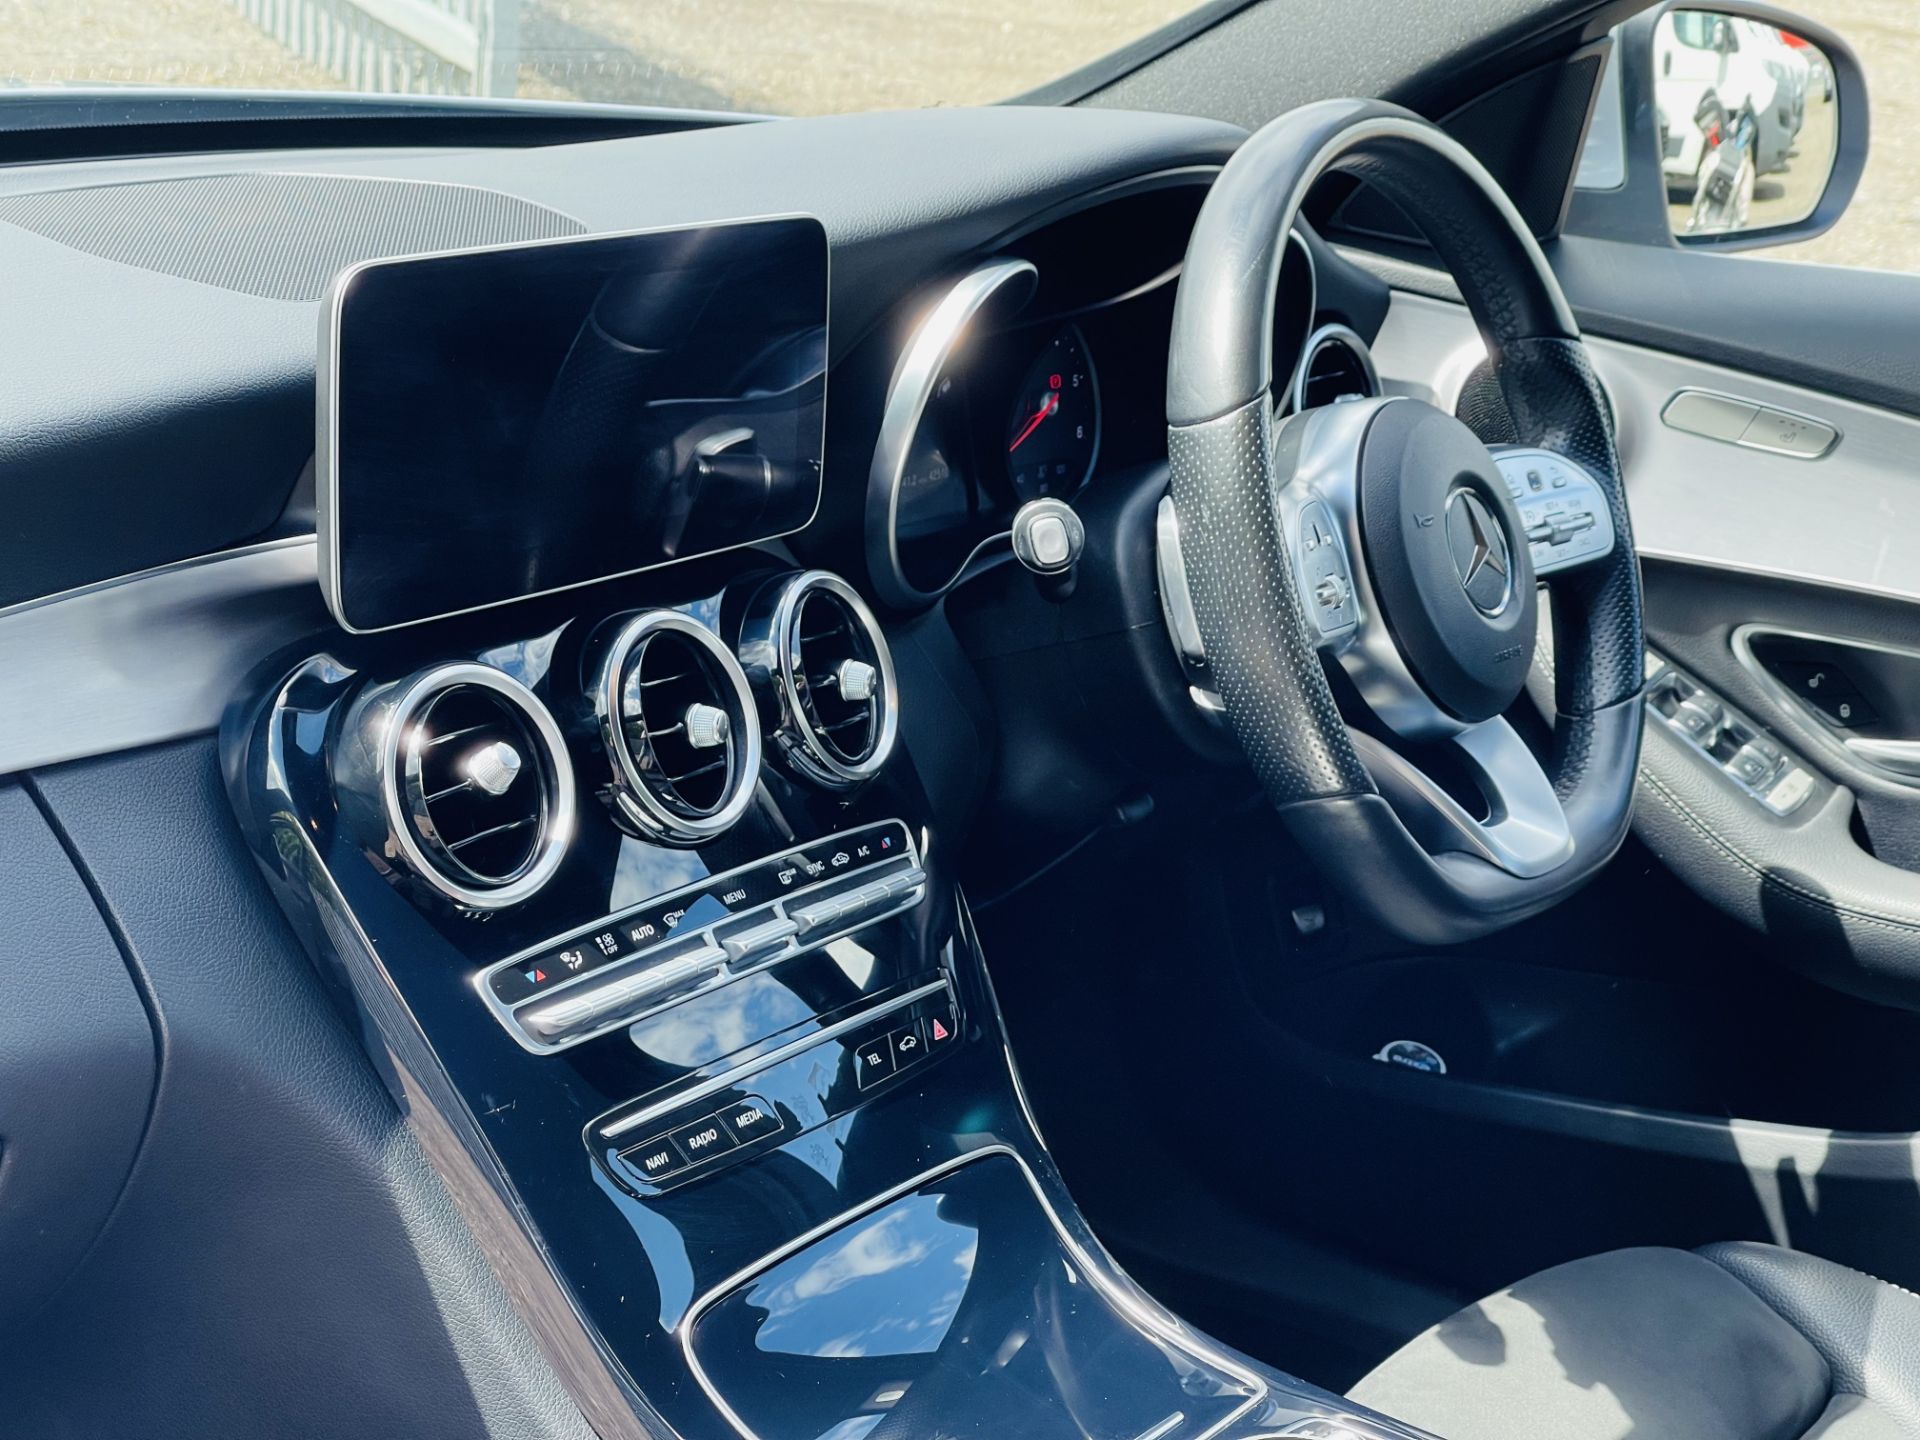 Mercedes Benz C220 AMG Line 9G-Tronic Auto 2019 ‘69 Reg’ - Sat Nav - A/C - Euro 6- ULEZ Compliant - Image 30 of 39